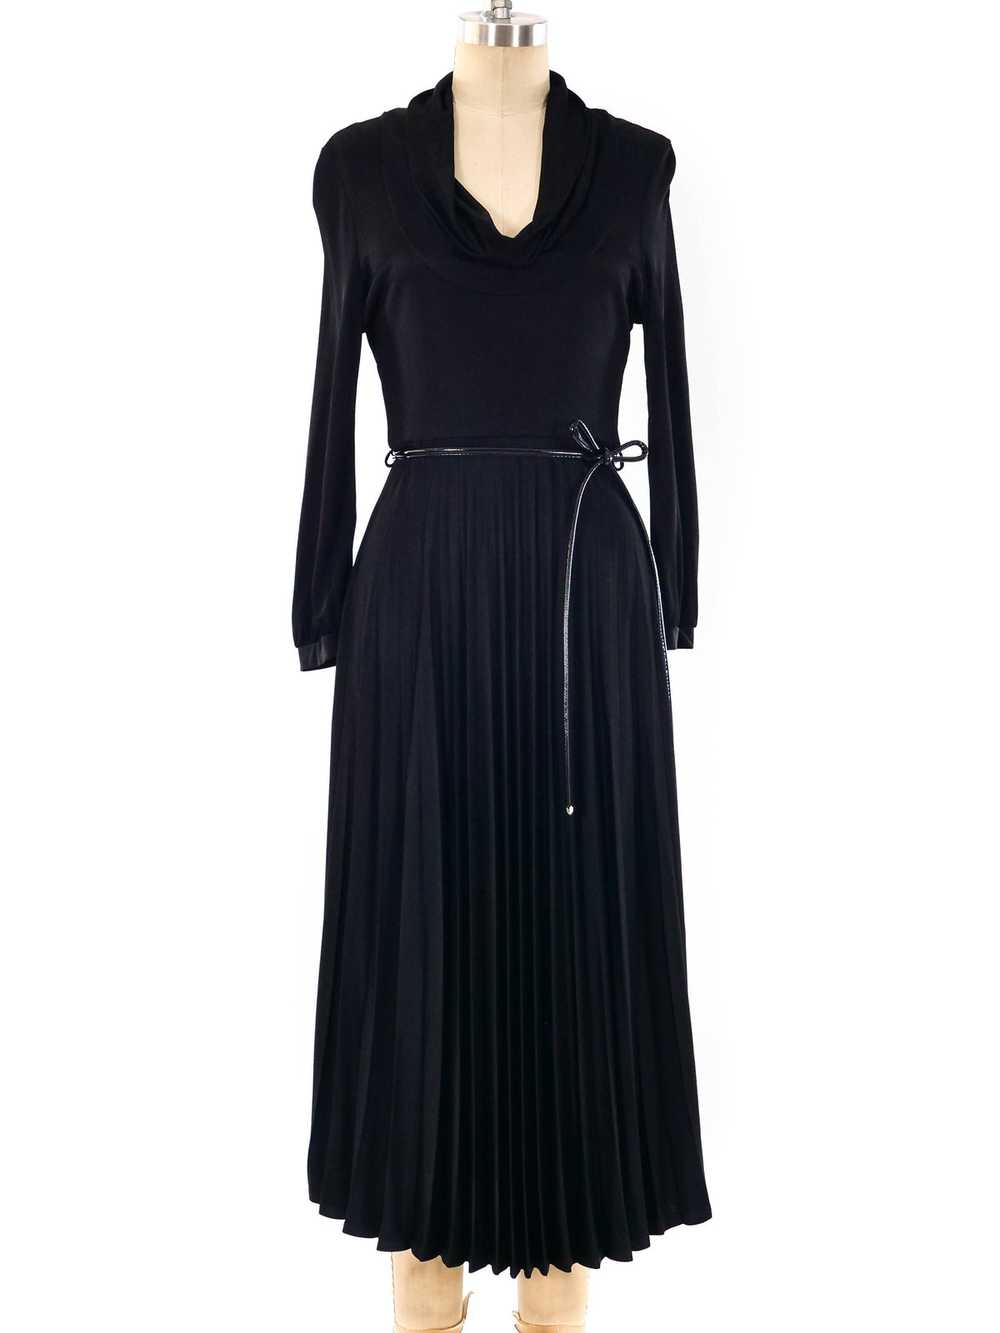 Alexander McQueen Pleated Jersey Dress - image 1